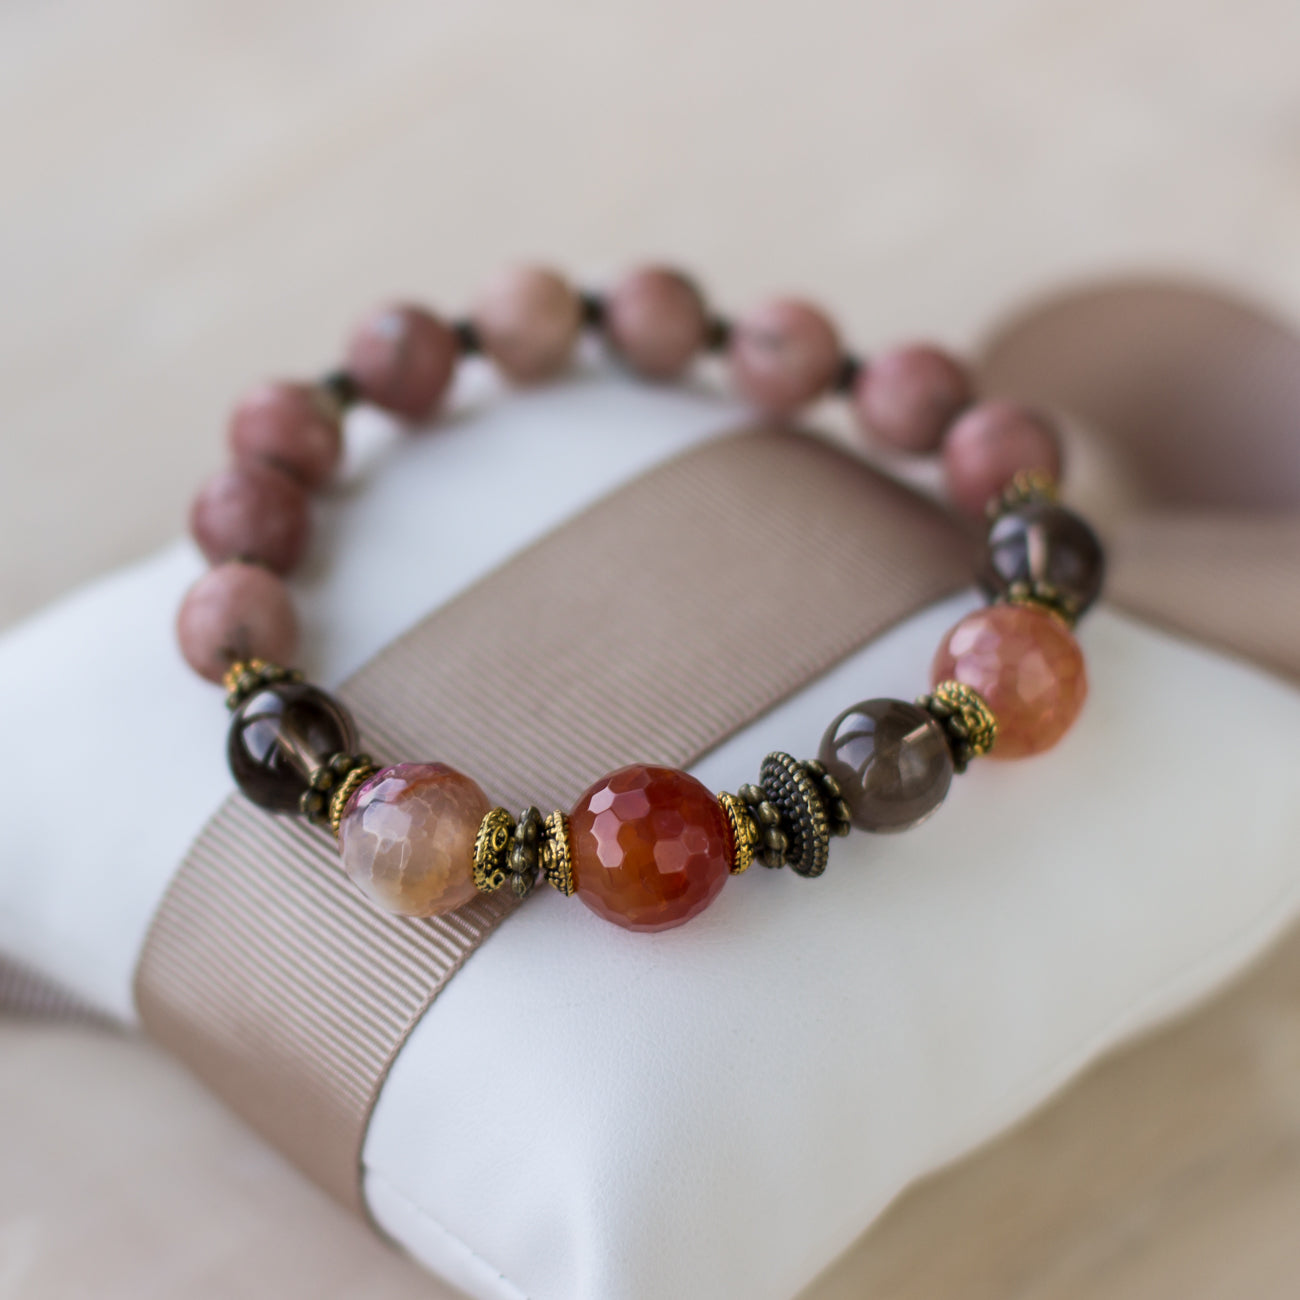 Shop online natural stone bracelet. Natural colors: Light brown-Blush rose-Orange-Smoky quartz-Agate bracelet. Handmade bracelet. Charm. Natural gemstone jewelry. Stretch bracelet.